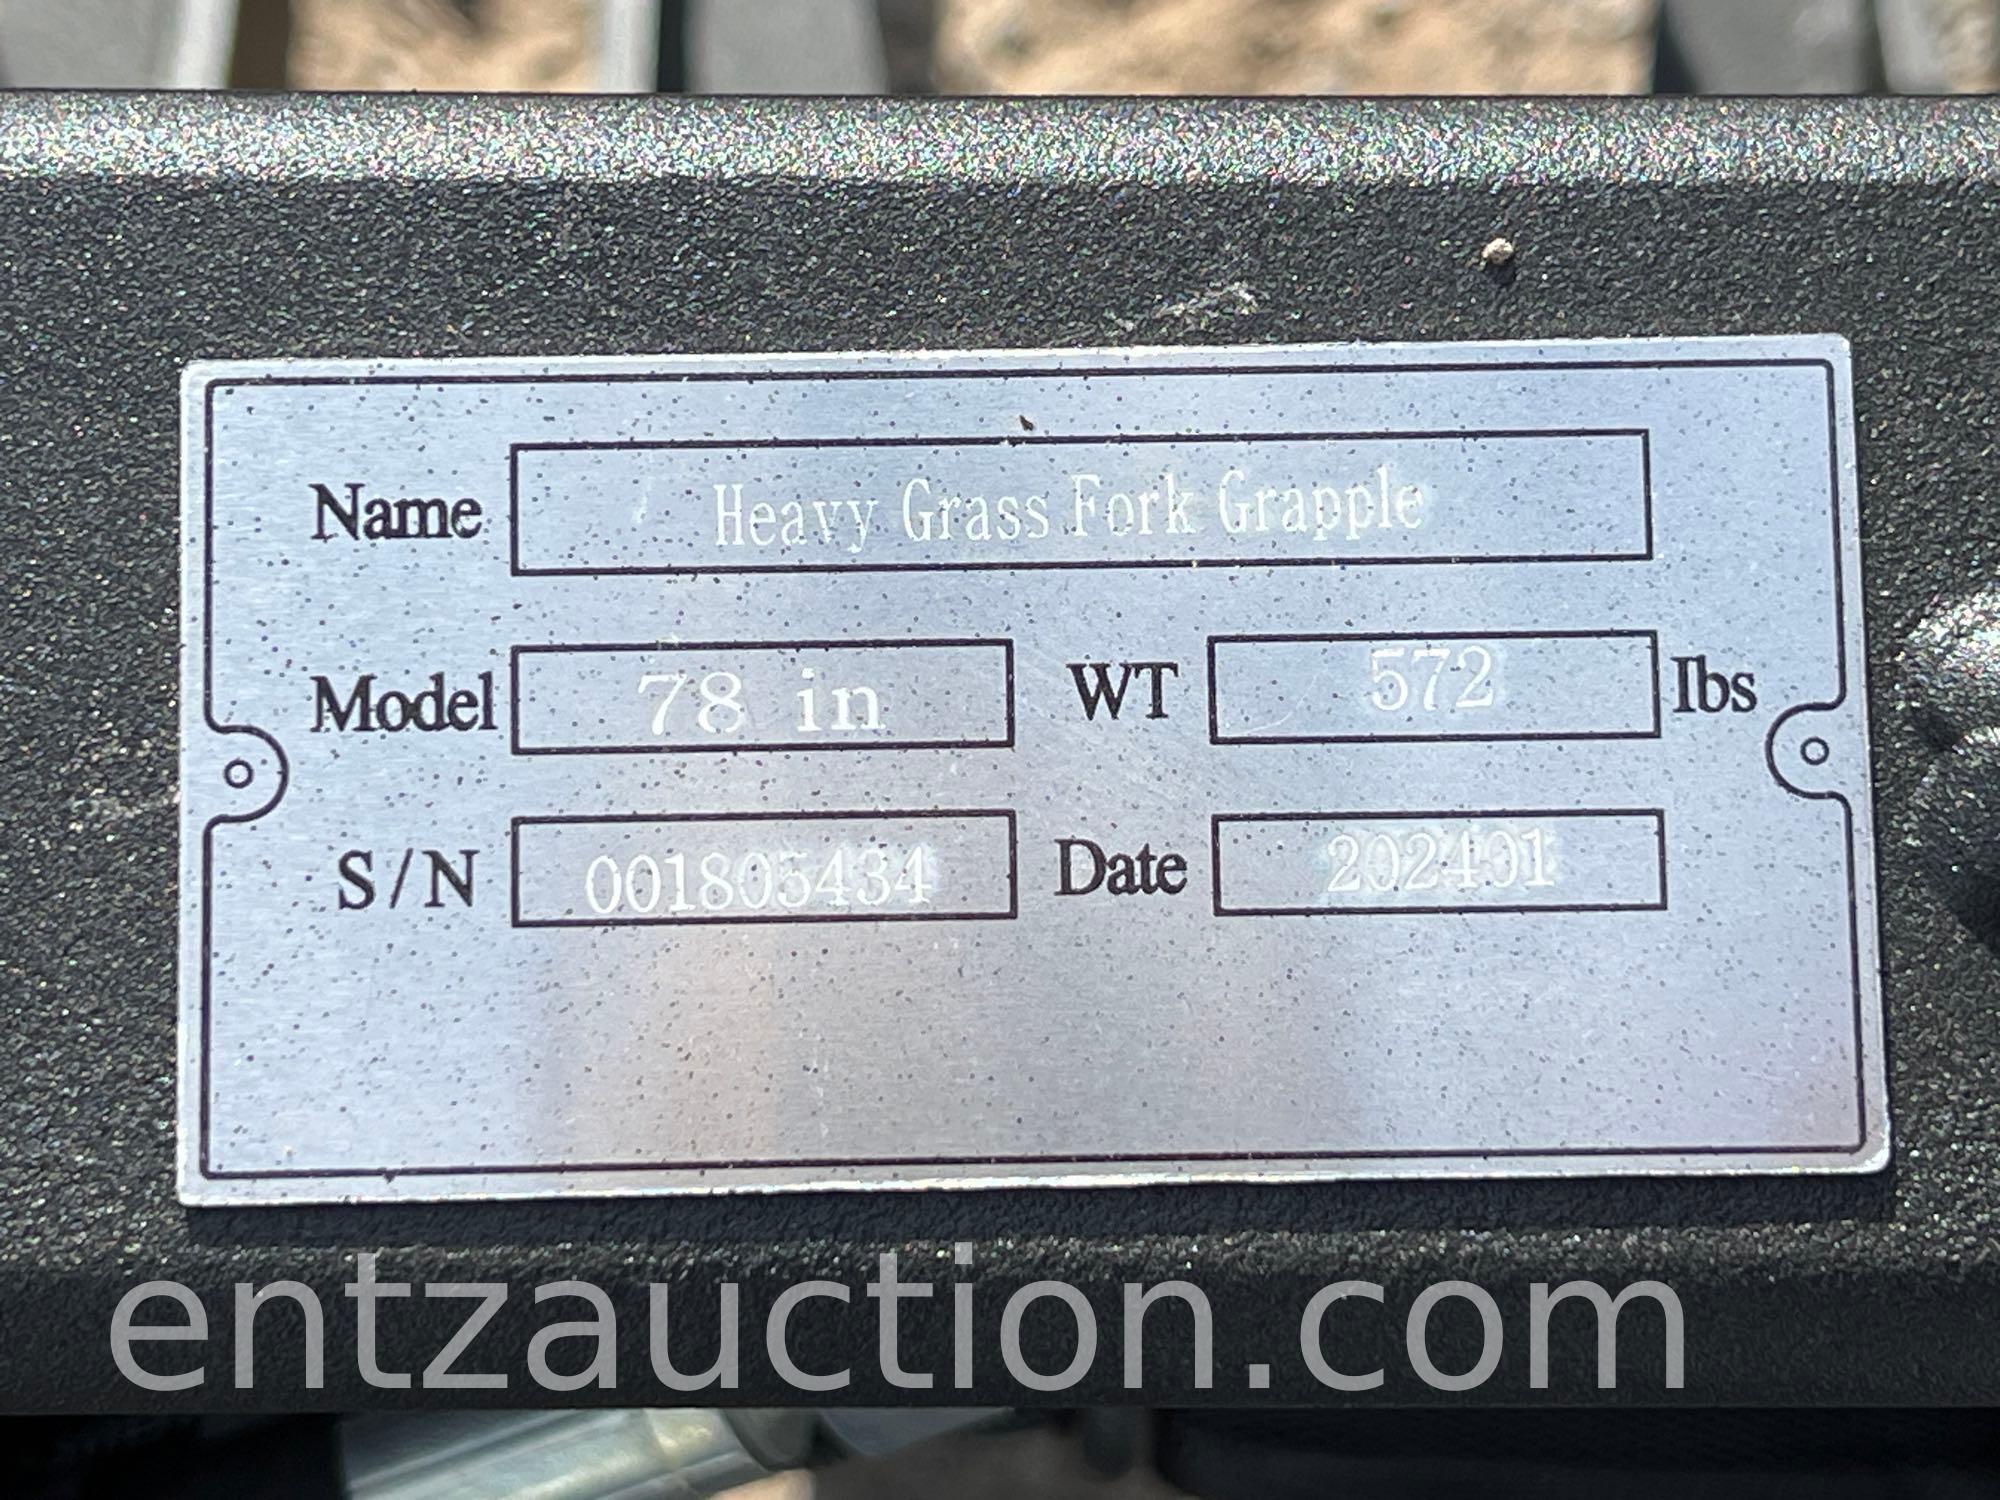 78" HD GRASSFORK GRAPPLE, USSA